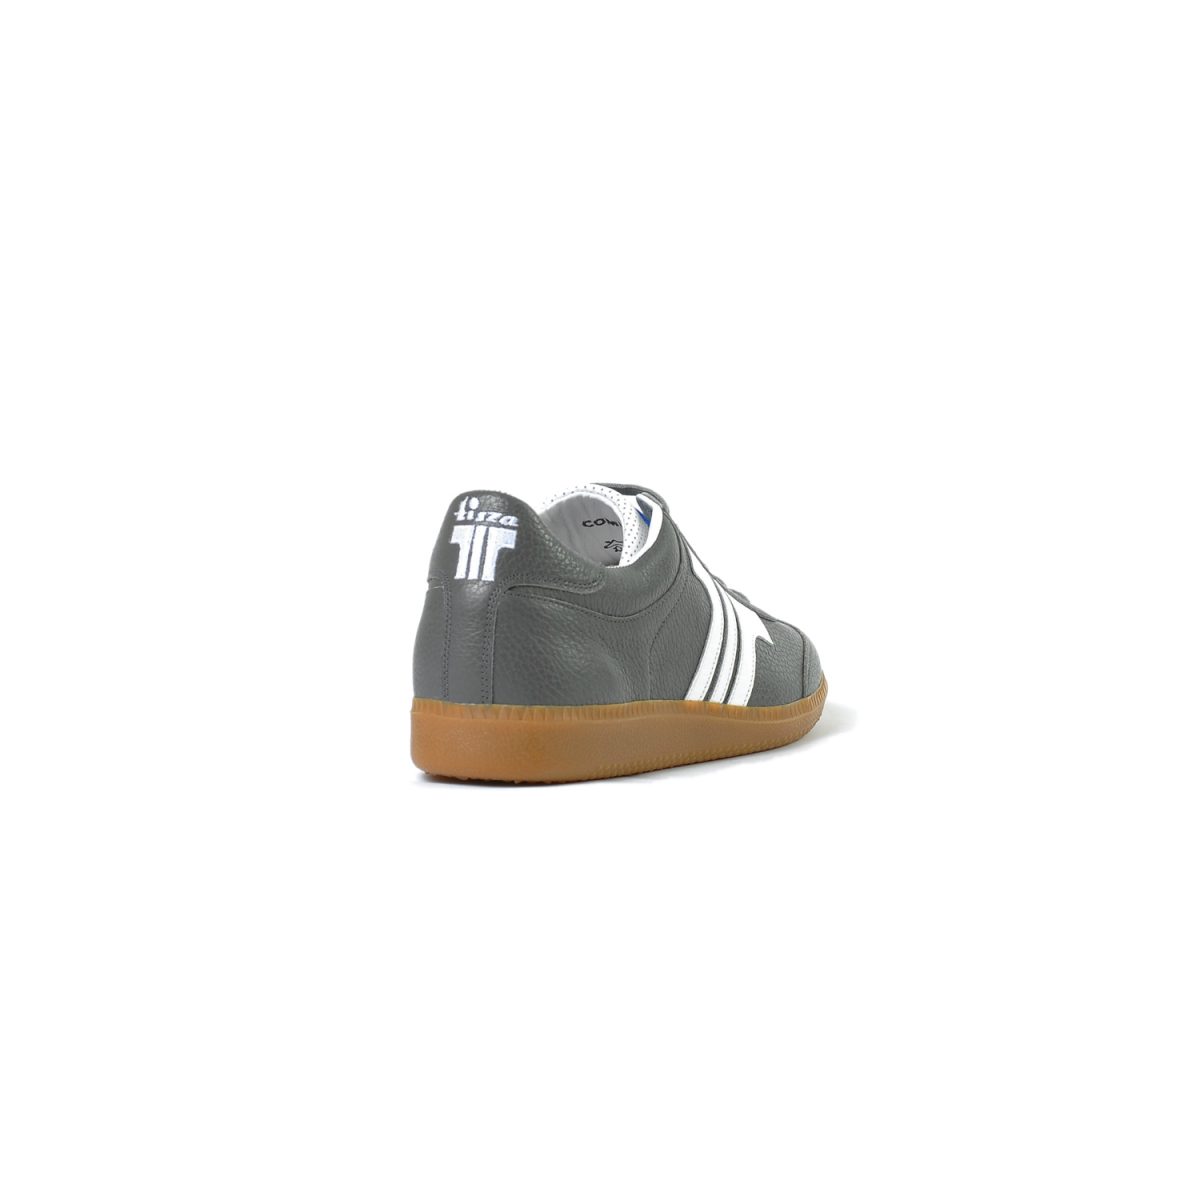 Tisza shoes - Compakt - Grey-white